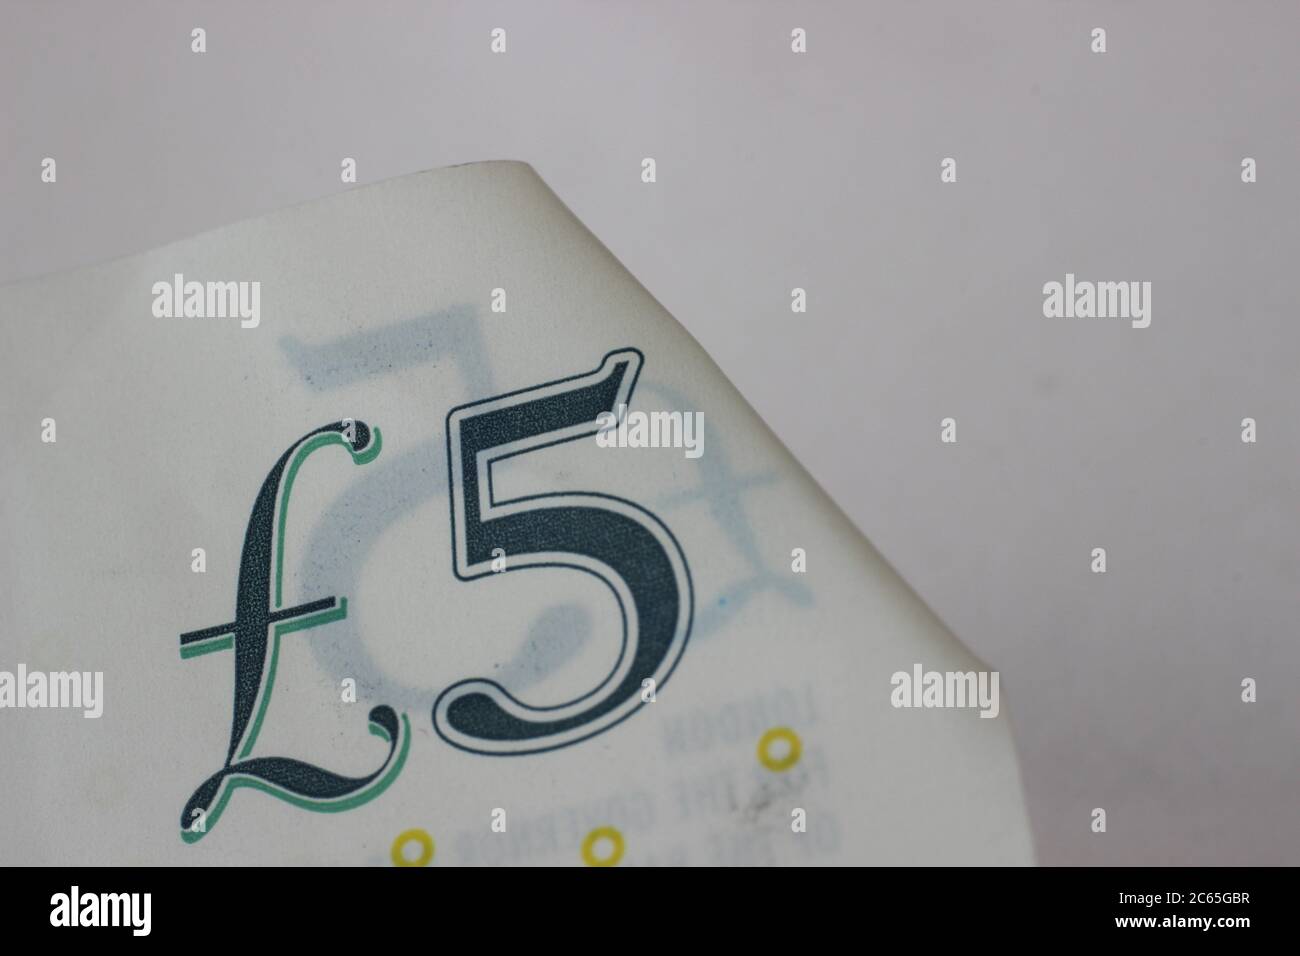 Five pound note Stock Photo